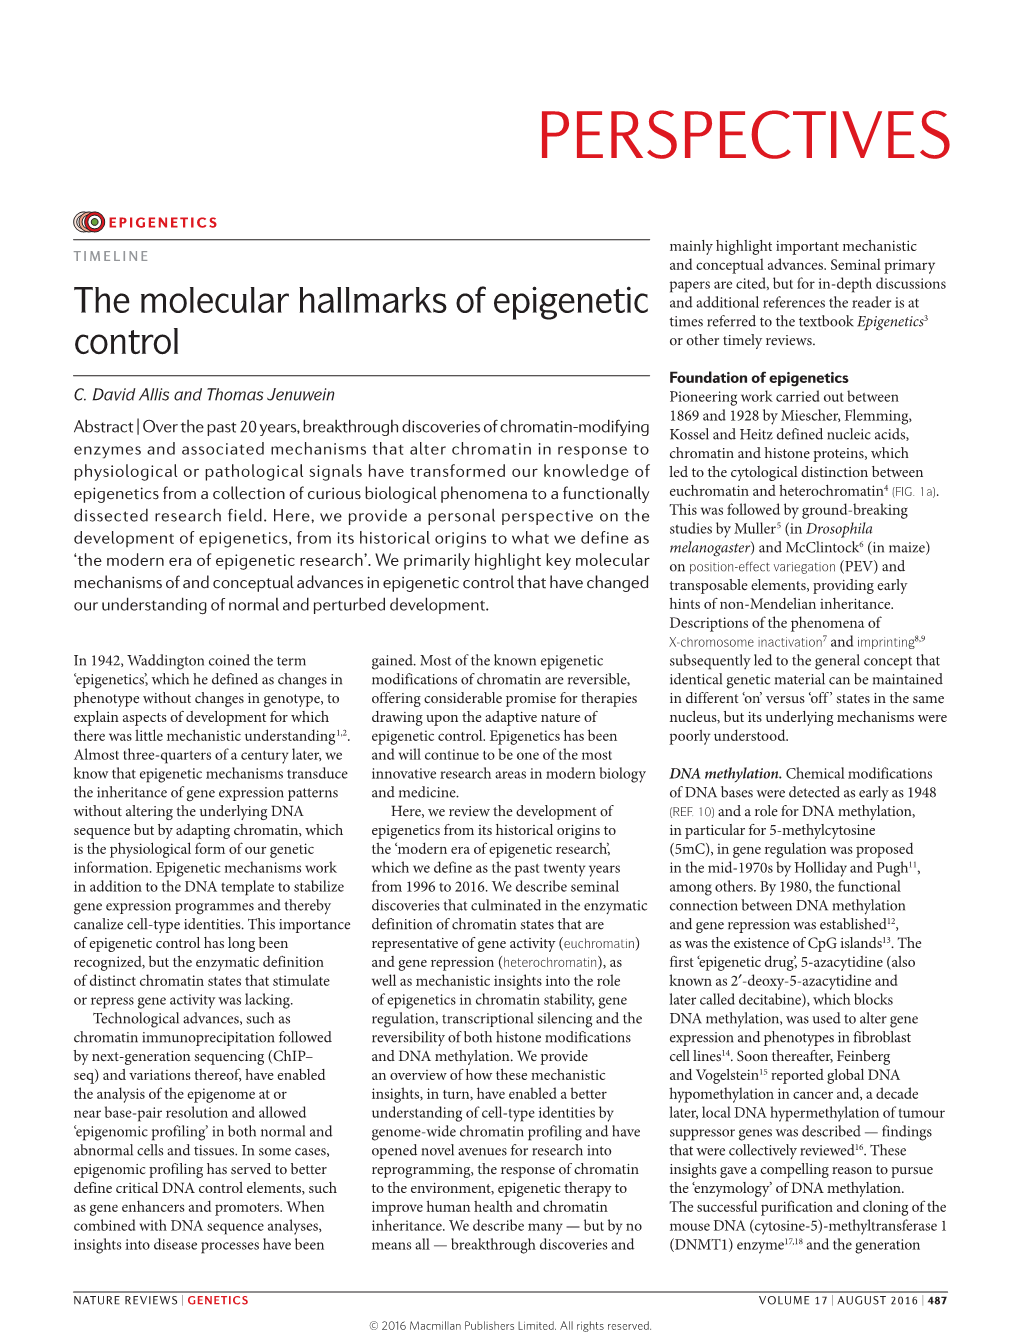 The Molecular Hallmarks of Epigenetic Control